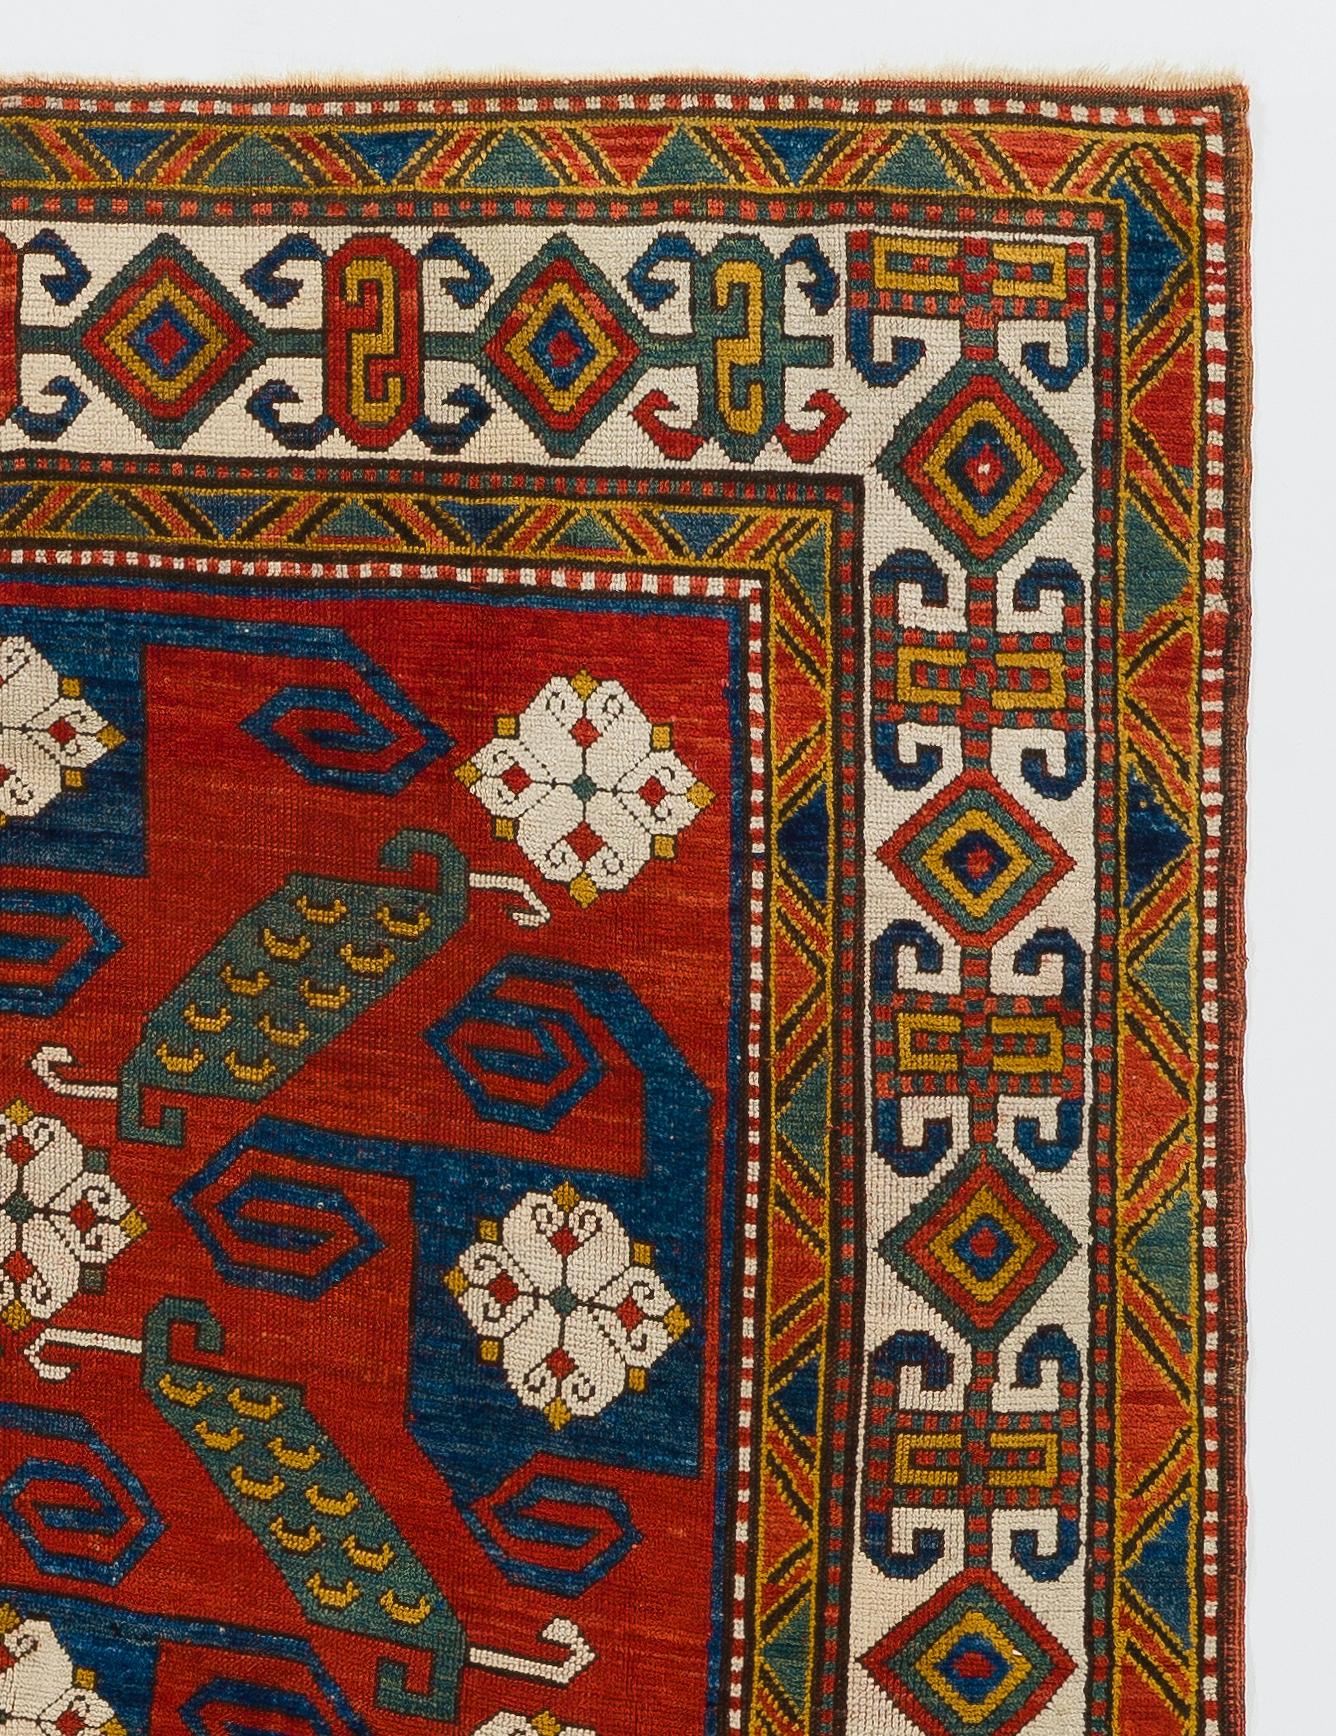 Hand-Knotted Antique Caucasian Pinwheel Kazak Rug. Top Shelf Collectors Carpet. 5'6